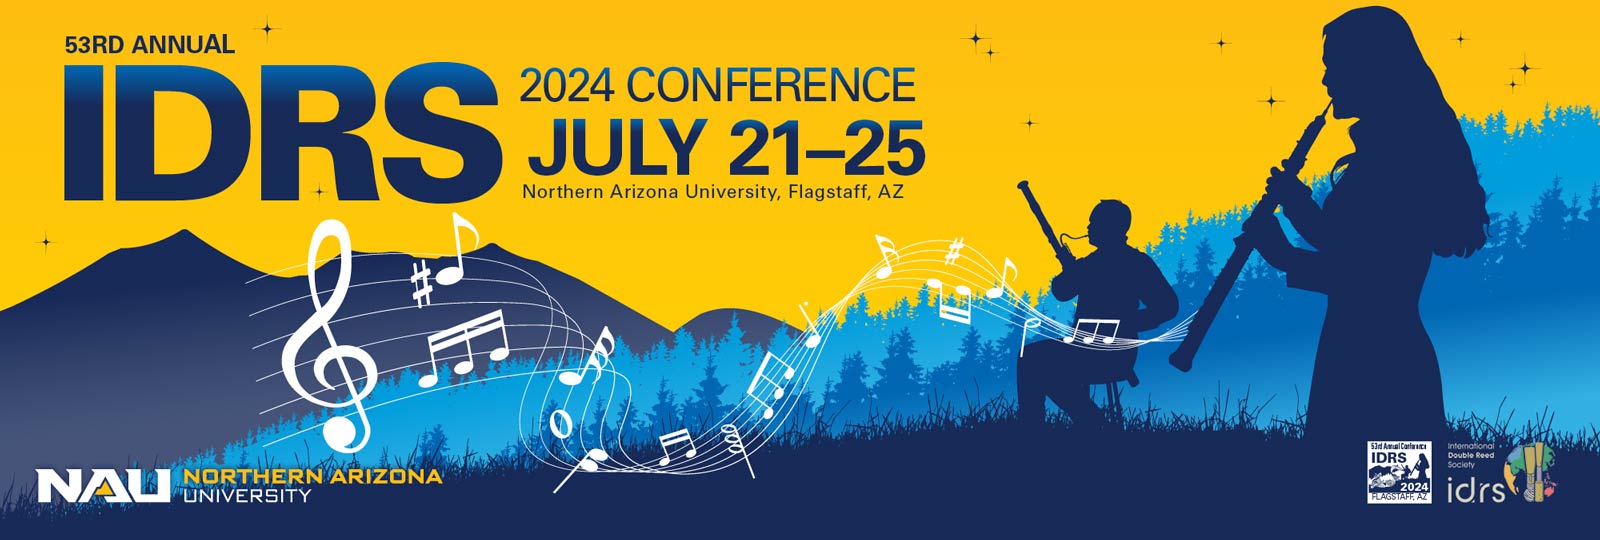 IDRS 53rd annual Conference 2024 Flagstaff, AZ – Northern Arizona University July 21–25